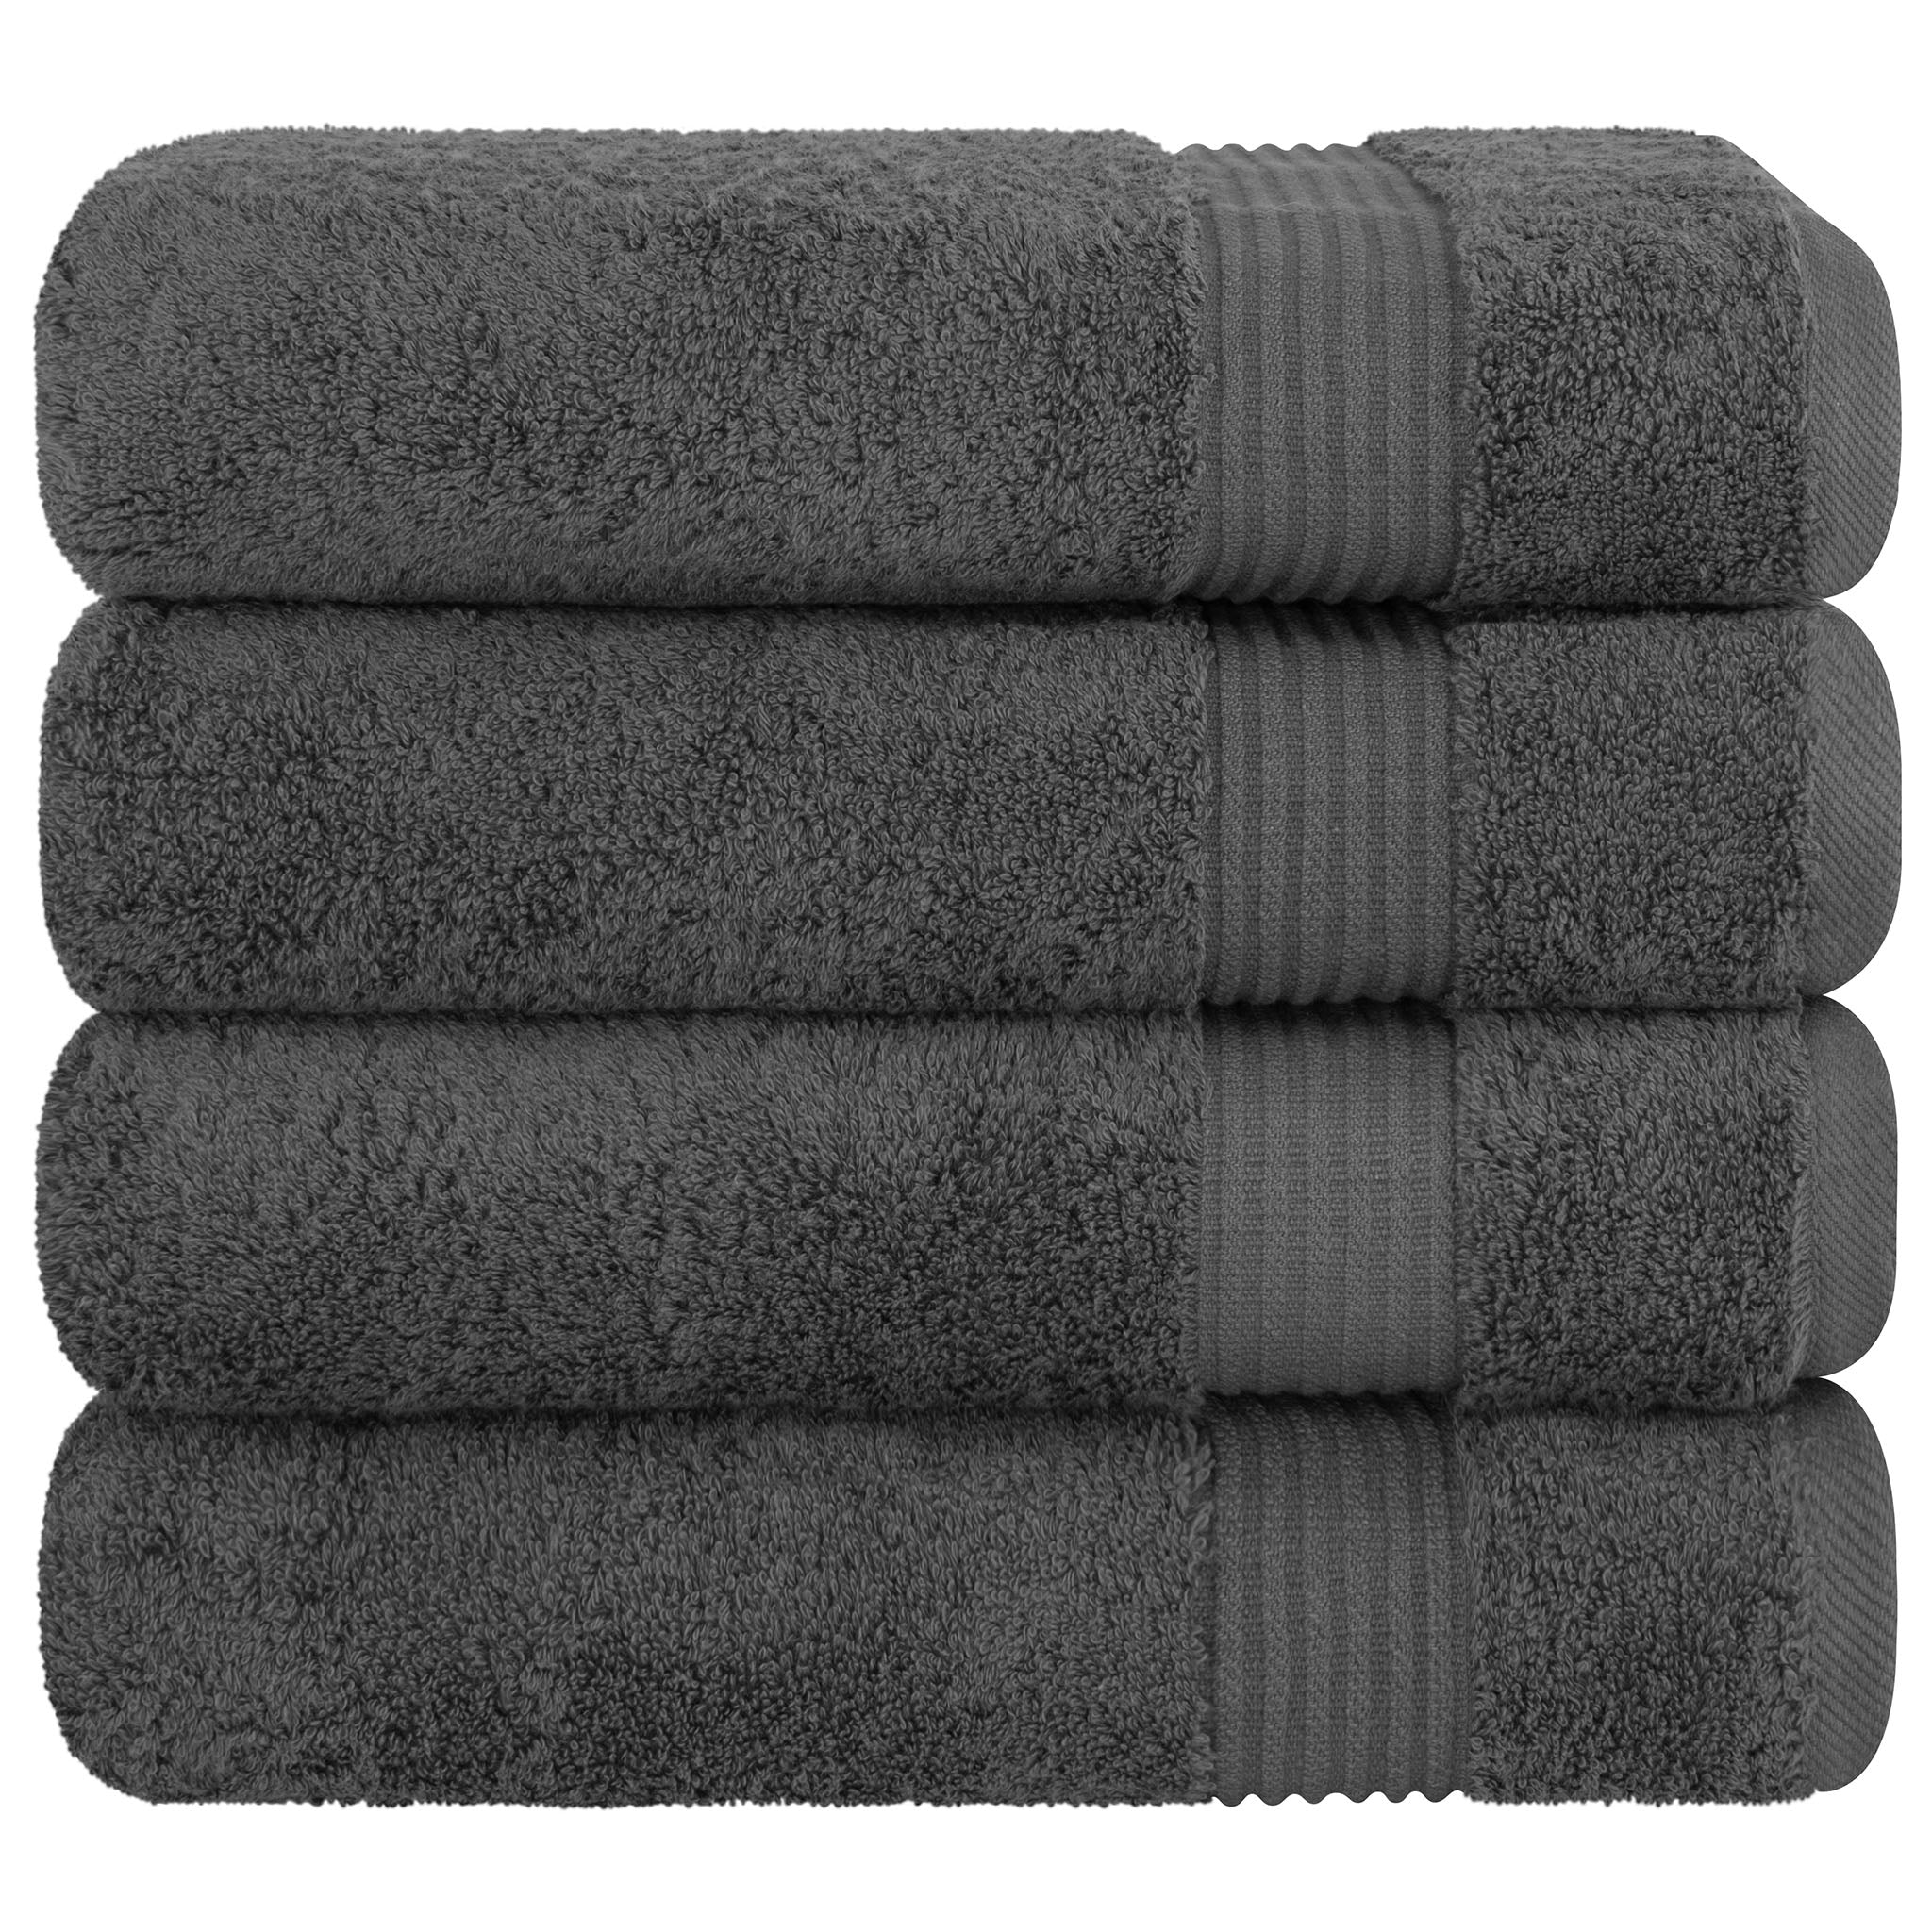 American Soft Linen Bekos 100% Cotton Turkish Towels, 4 Piece Bath Towel Set -gray-06